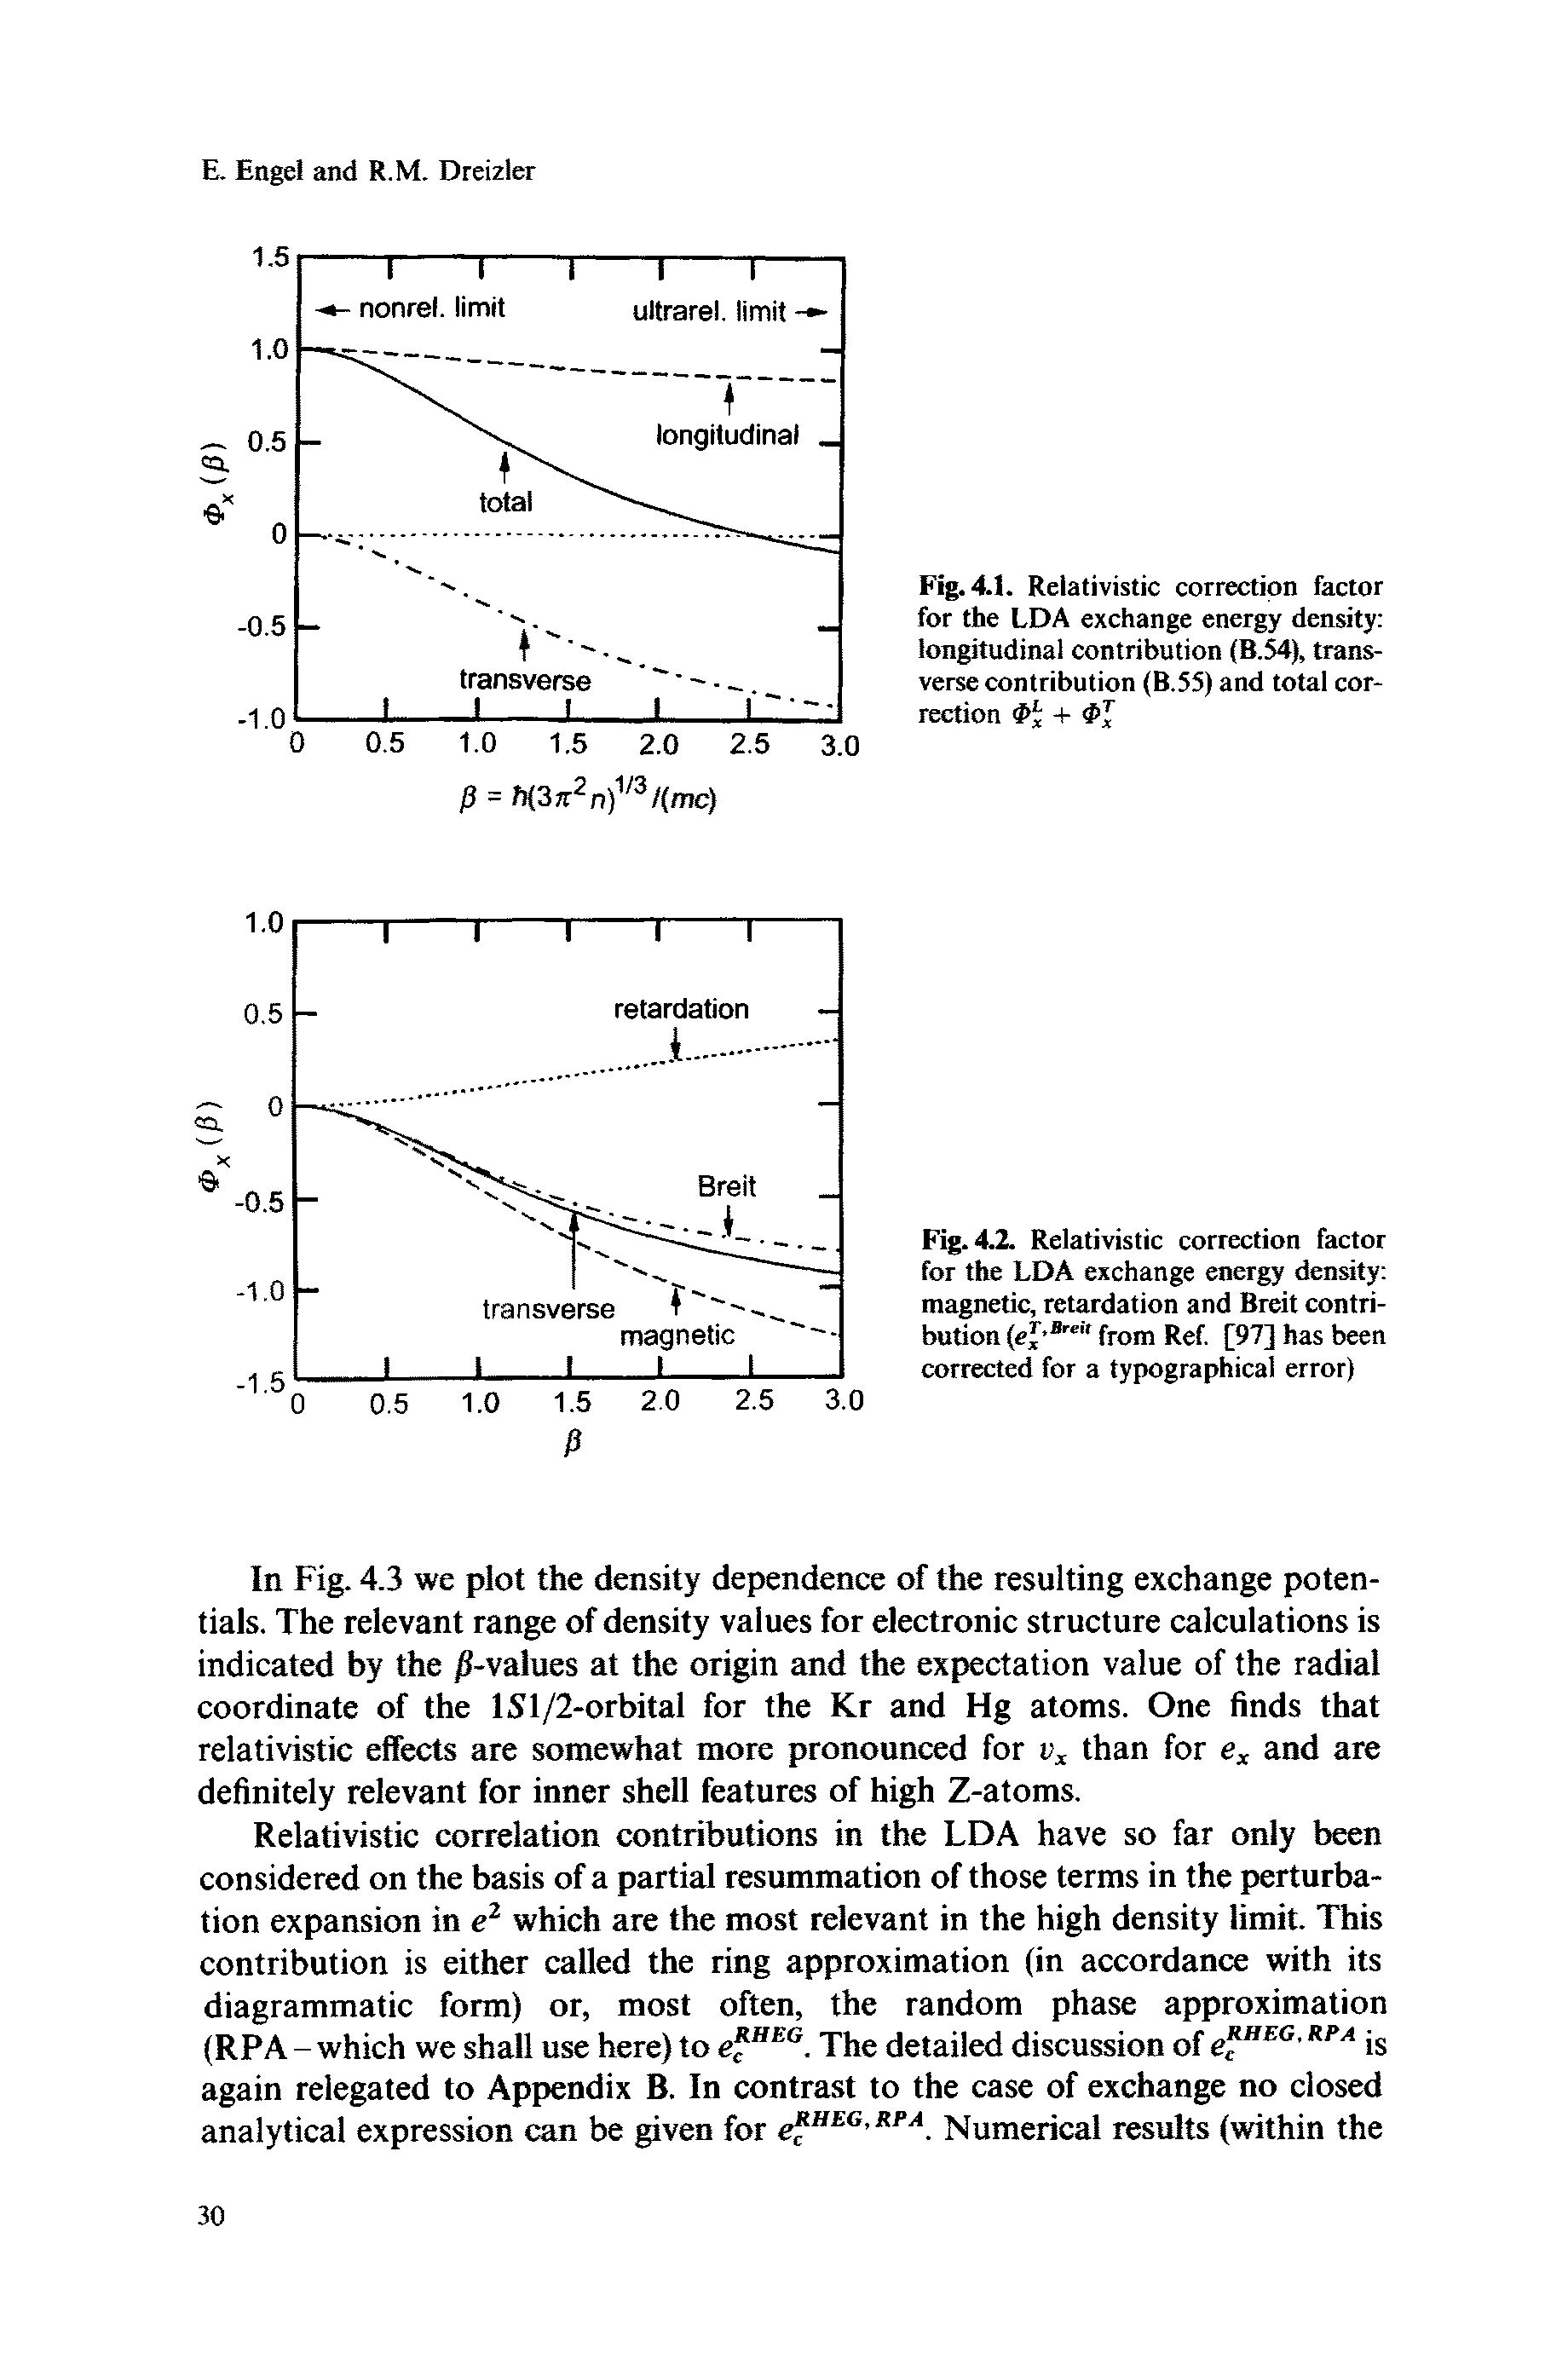 Fig. 4.1. Relativistic correction factor for the EDA exchange energy density longitudinal contribution (B.54), transverse contribution (B.55) and total correction -I- J...